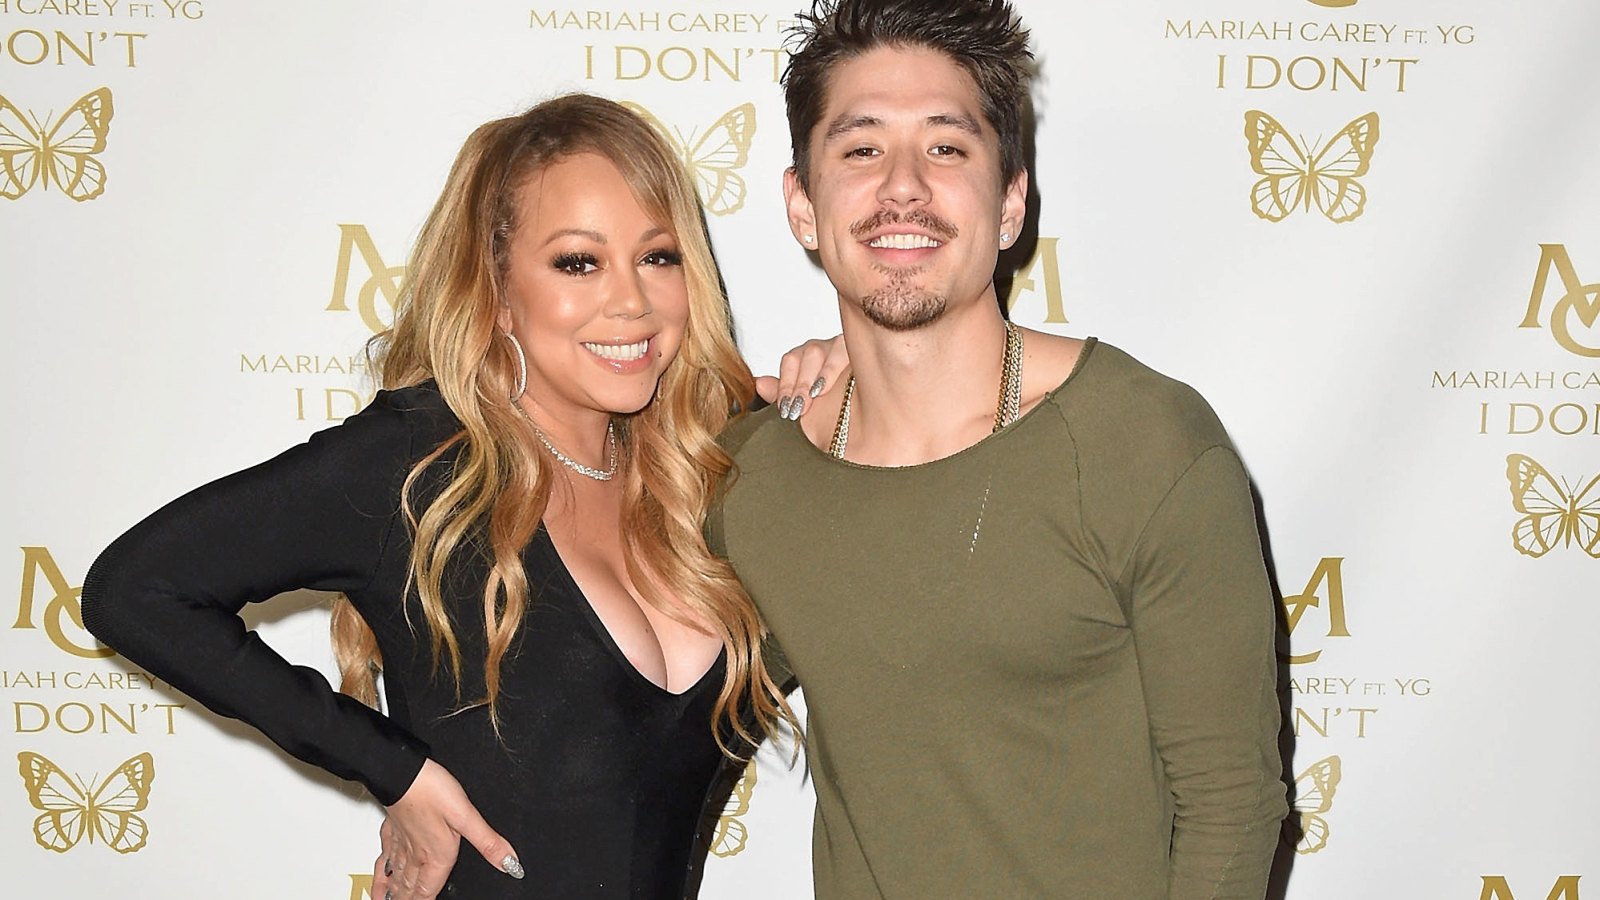 Mariah Carey and Bryan Tanaka